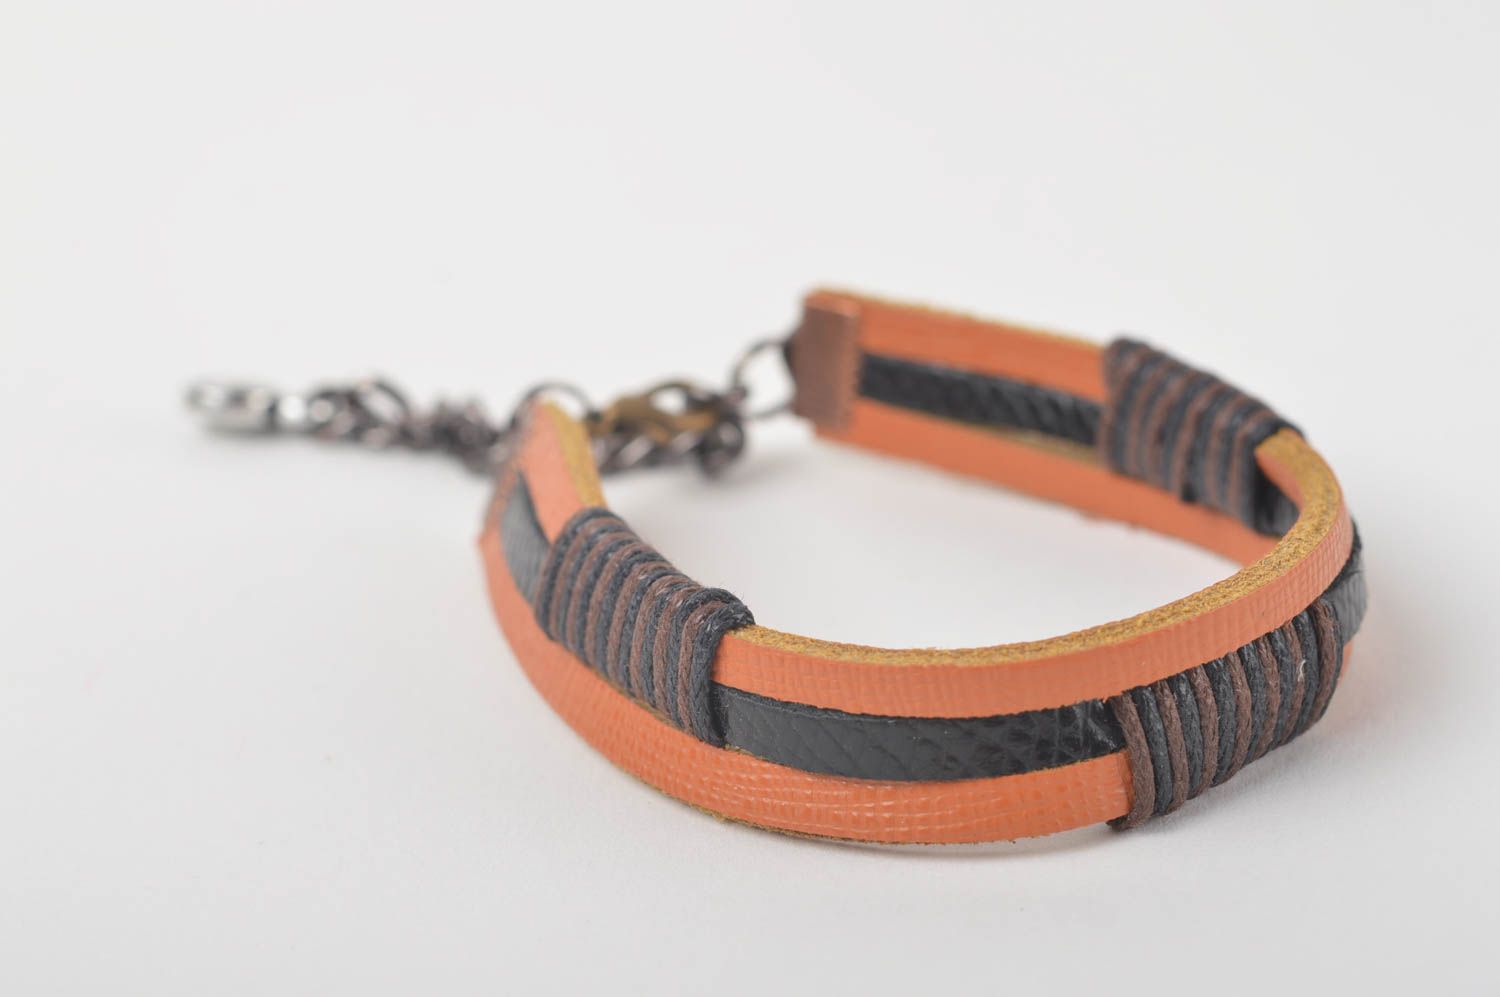 Handmade genuine leather bracelet wrist bracelet designs fashion trends photo 2